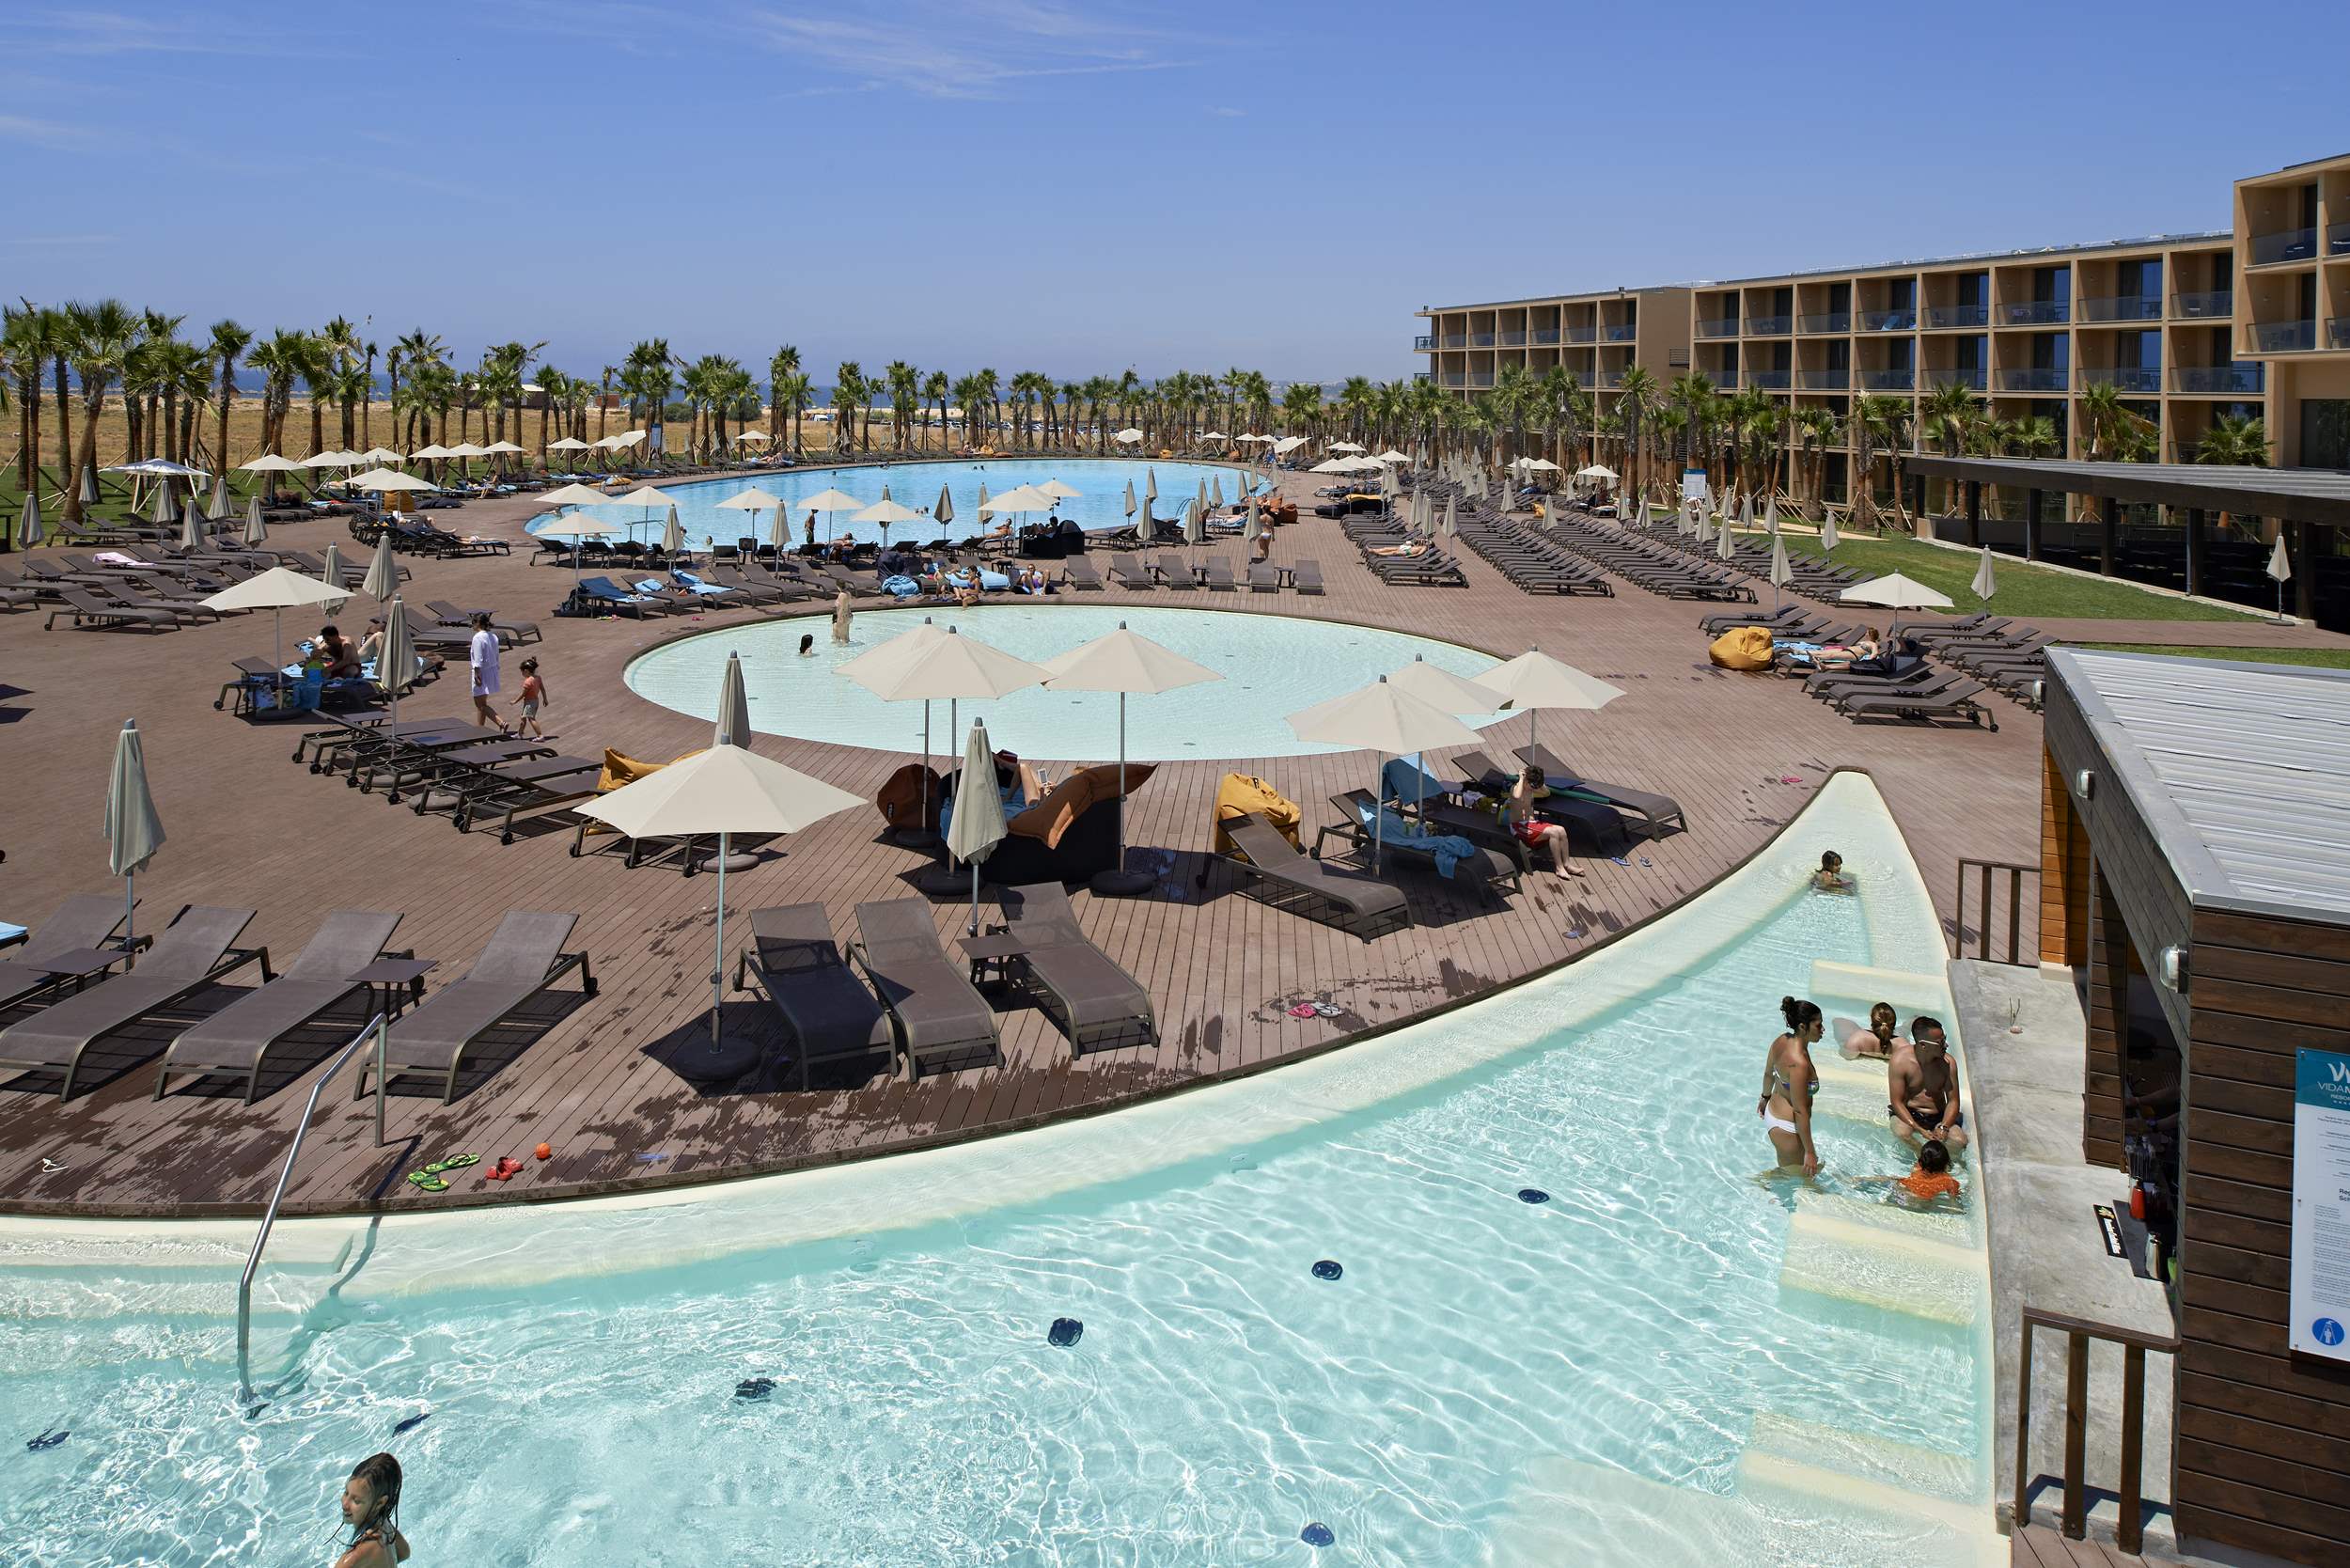 Vidamar Hotel Superior Pool View Room,HB,, Double Room, 1 bedroom hotel in Vidamar Resort, Algarve Photo #1